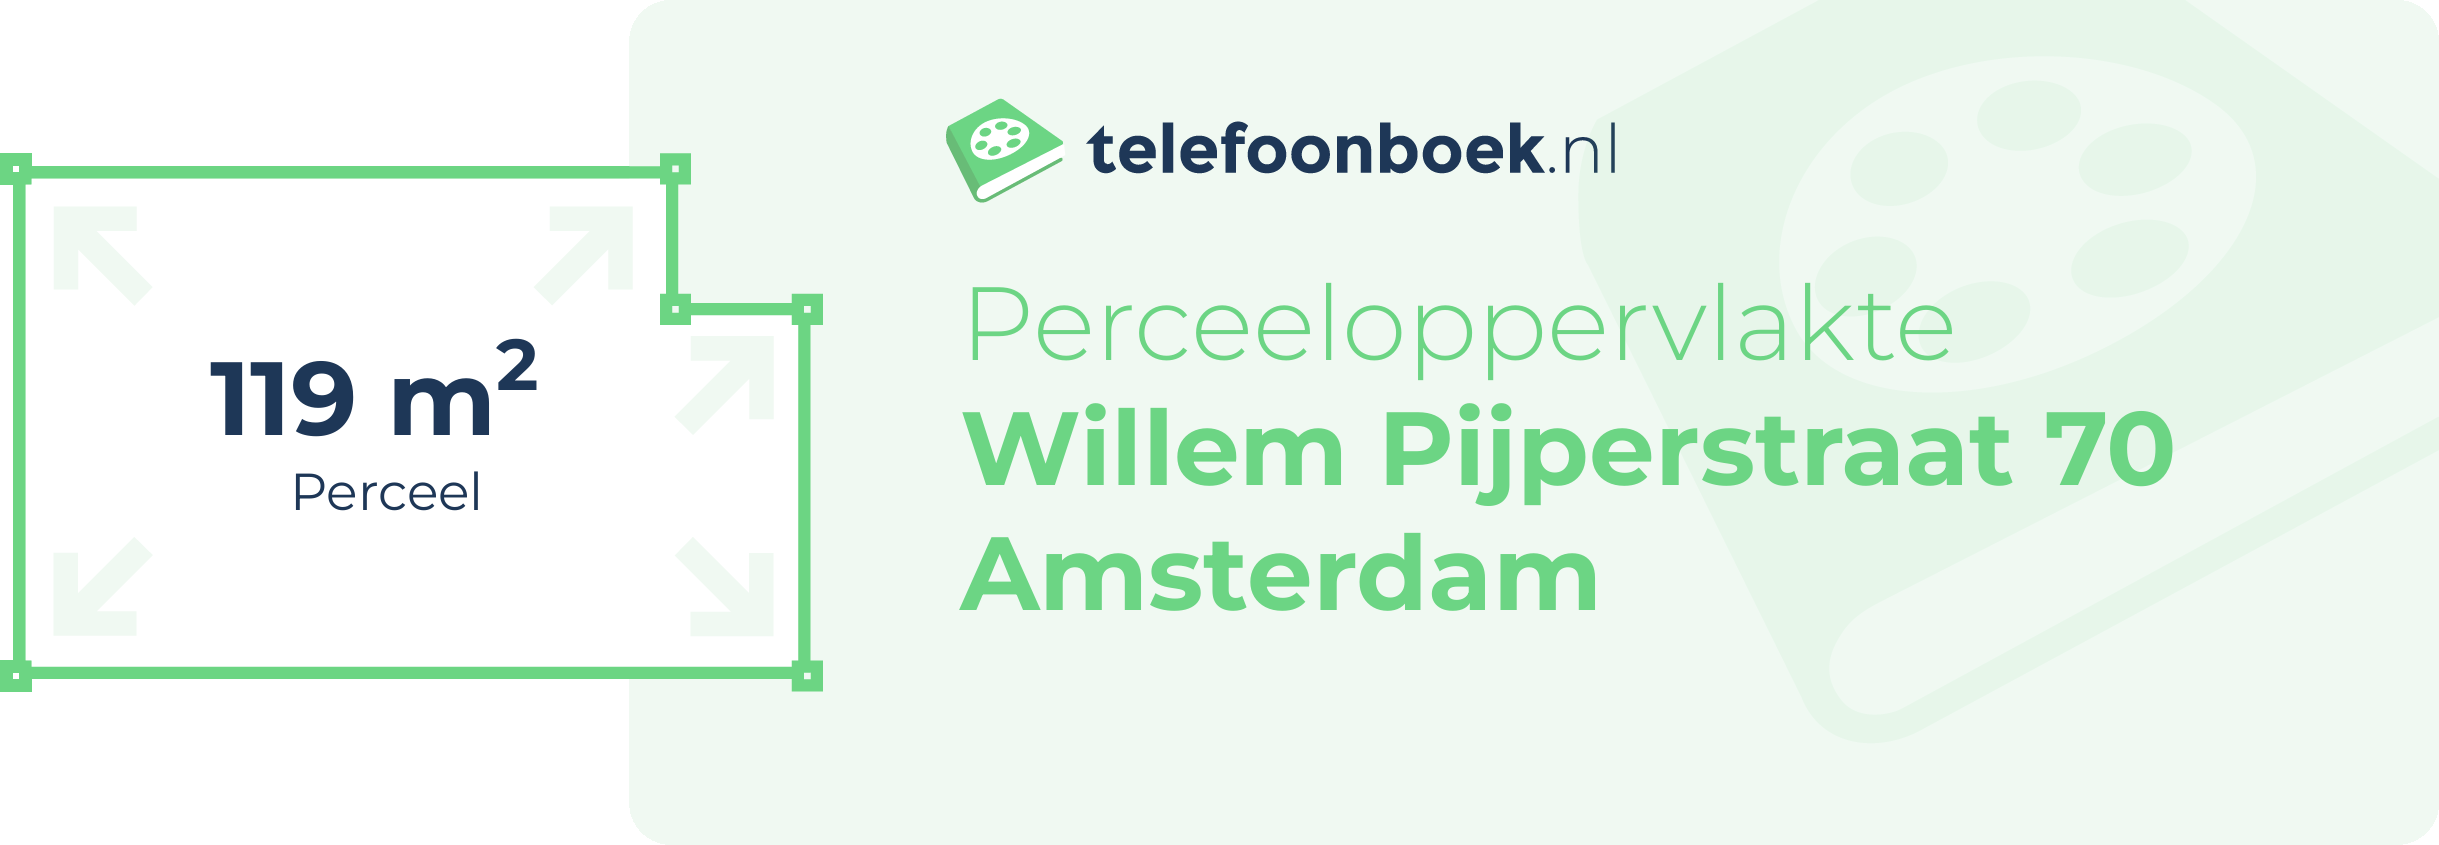 Perceeloppervlakte Willem Pijperstraat 70 Amsterdam